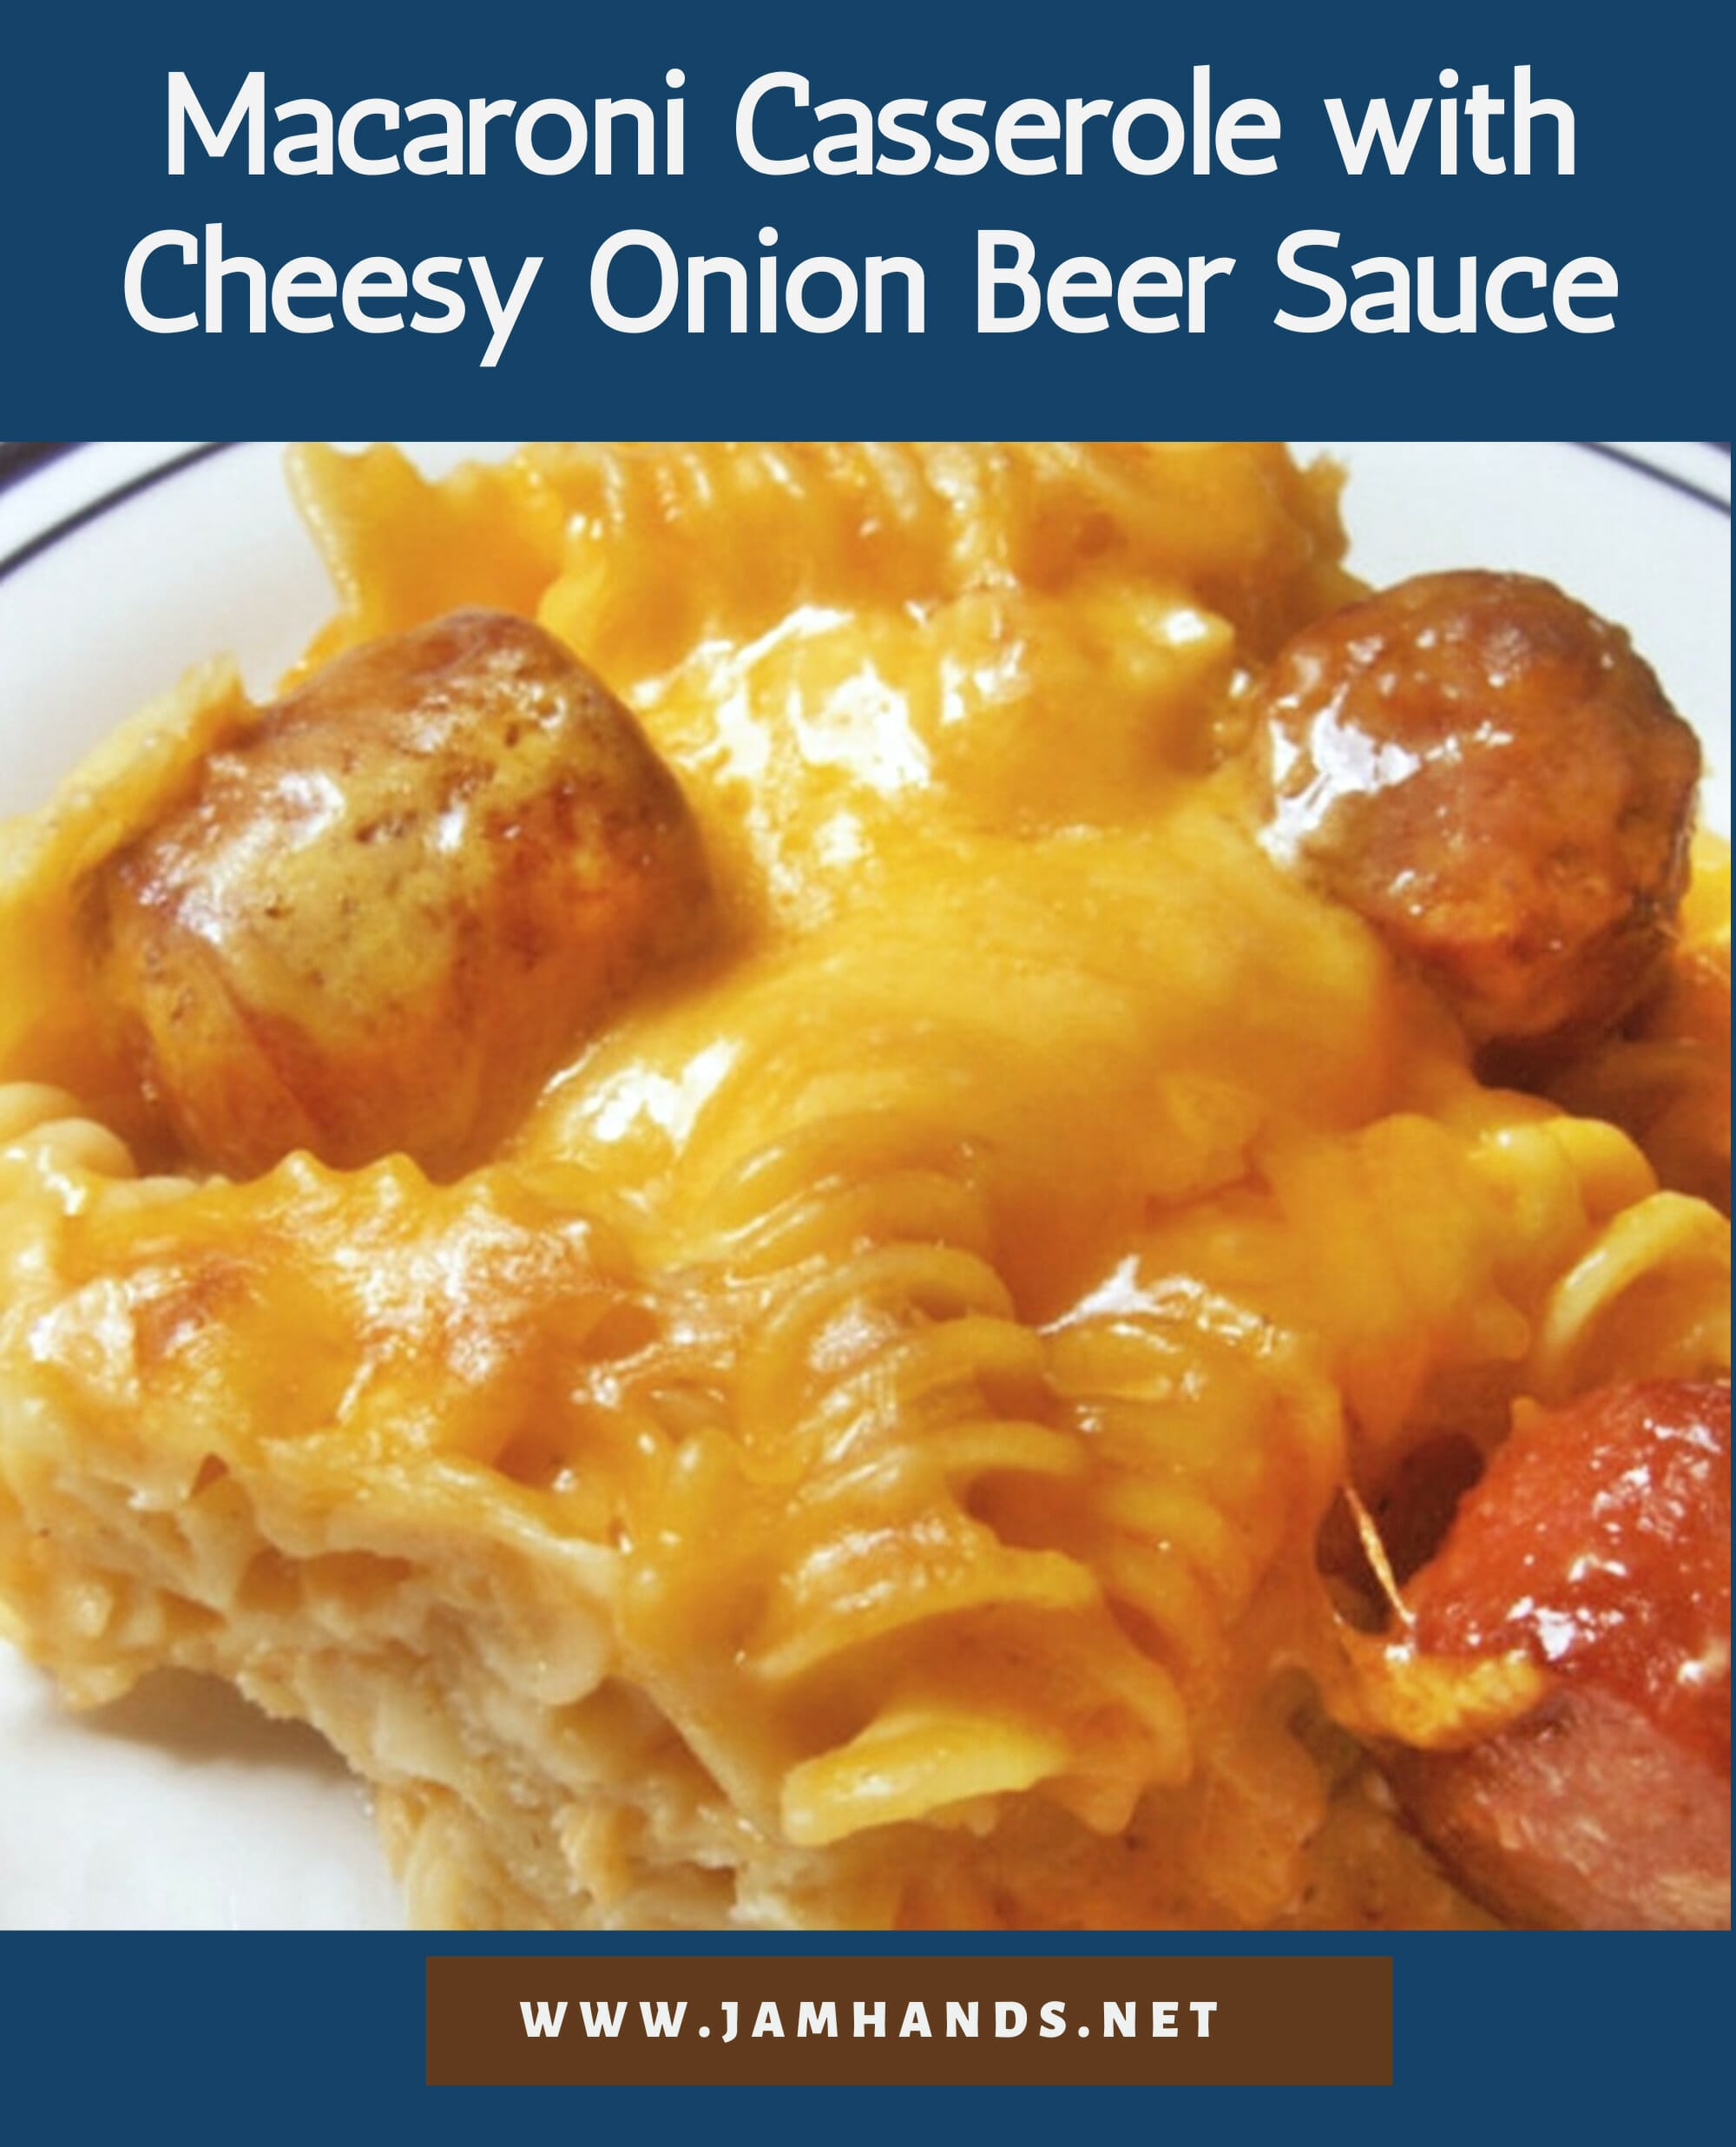 Macaroni Casserole with Cheesy Onion Beer Sauce